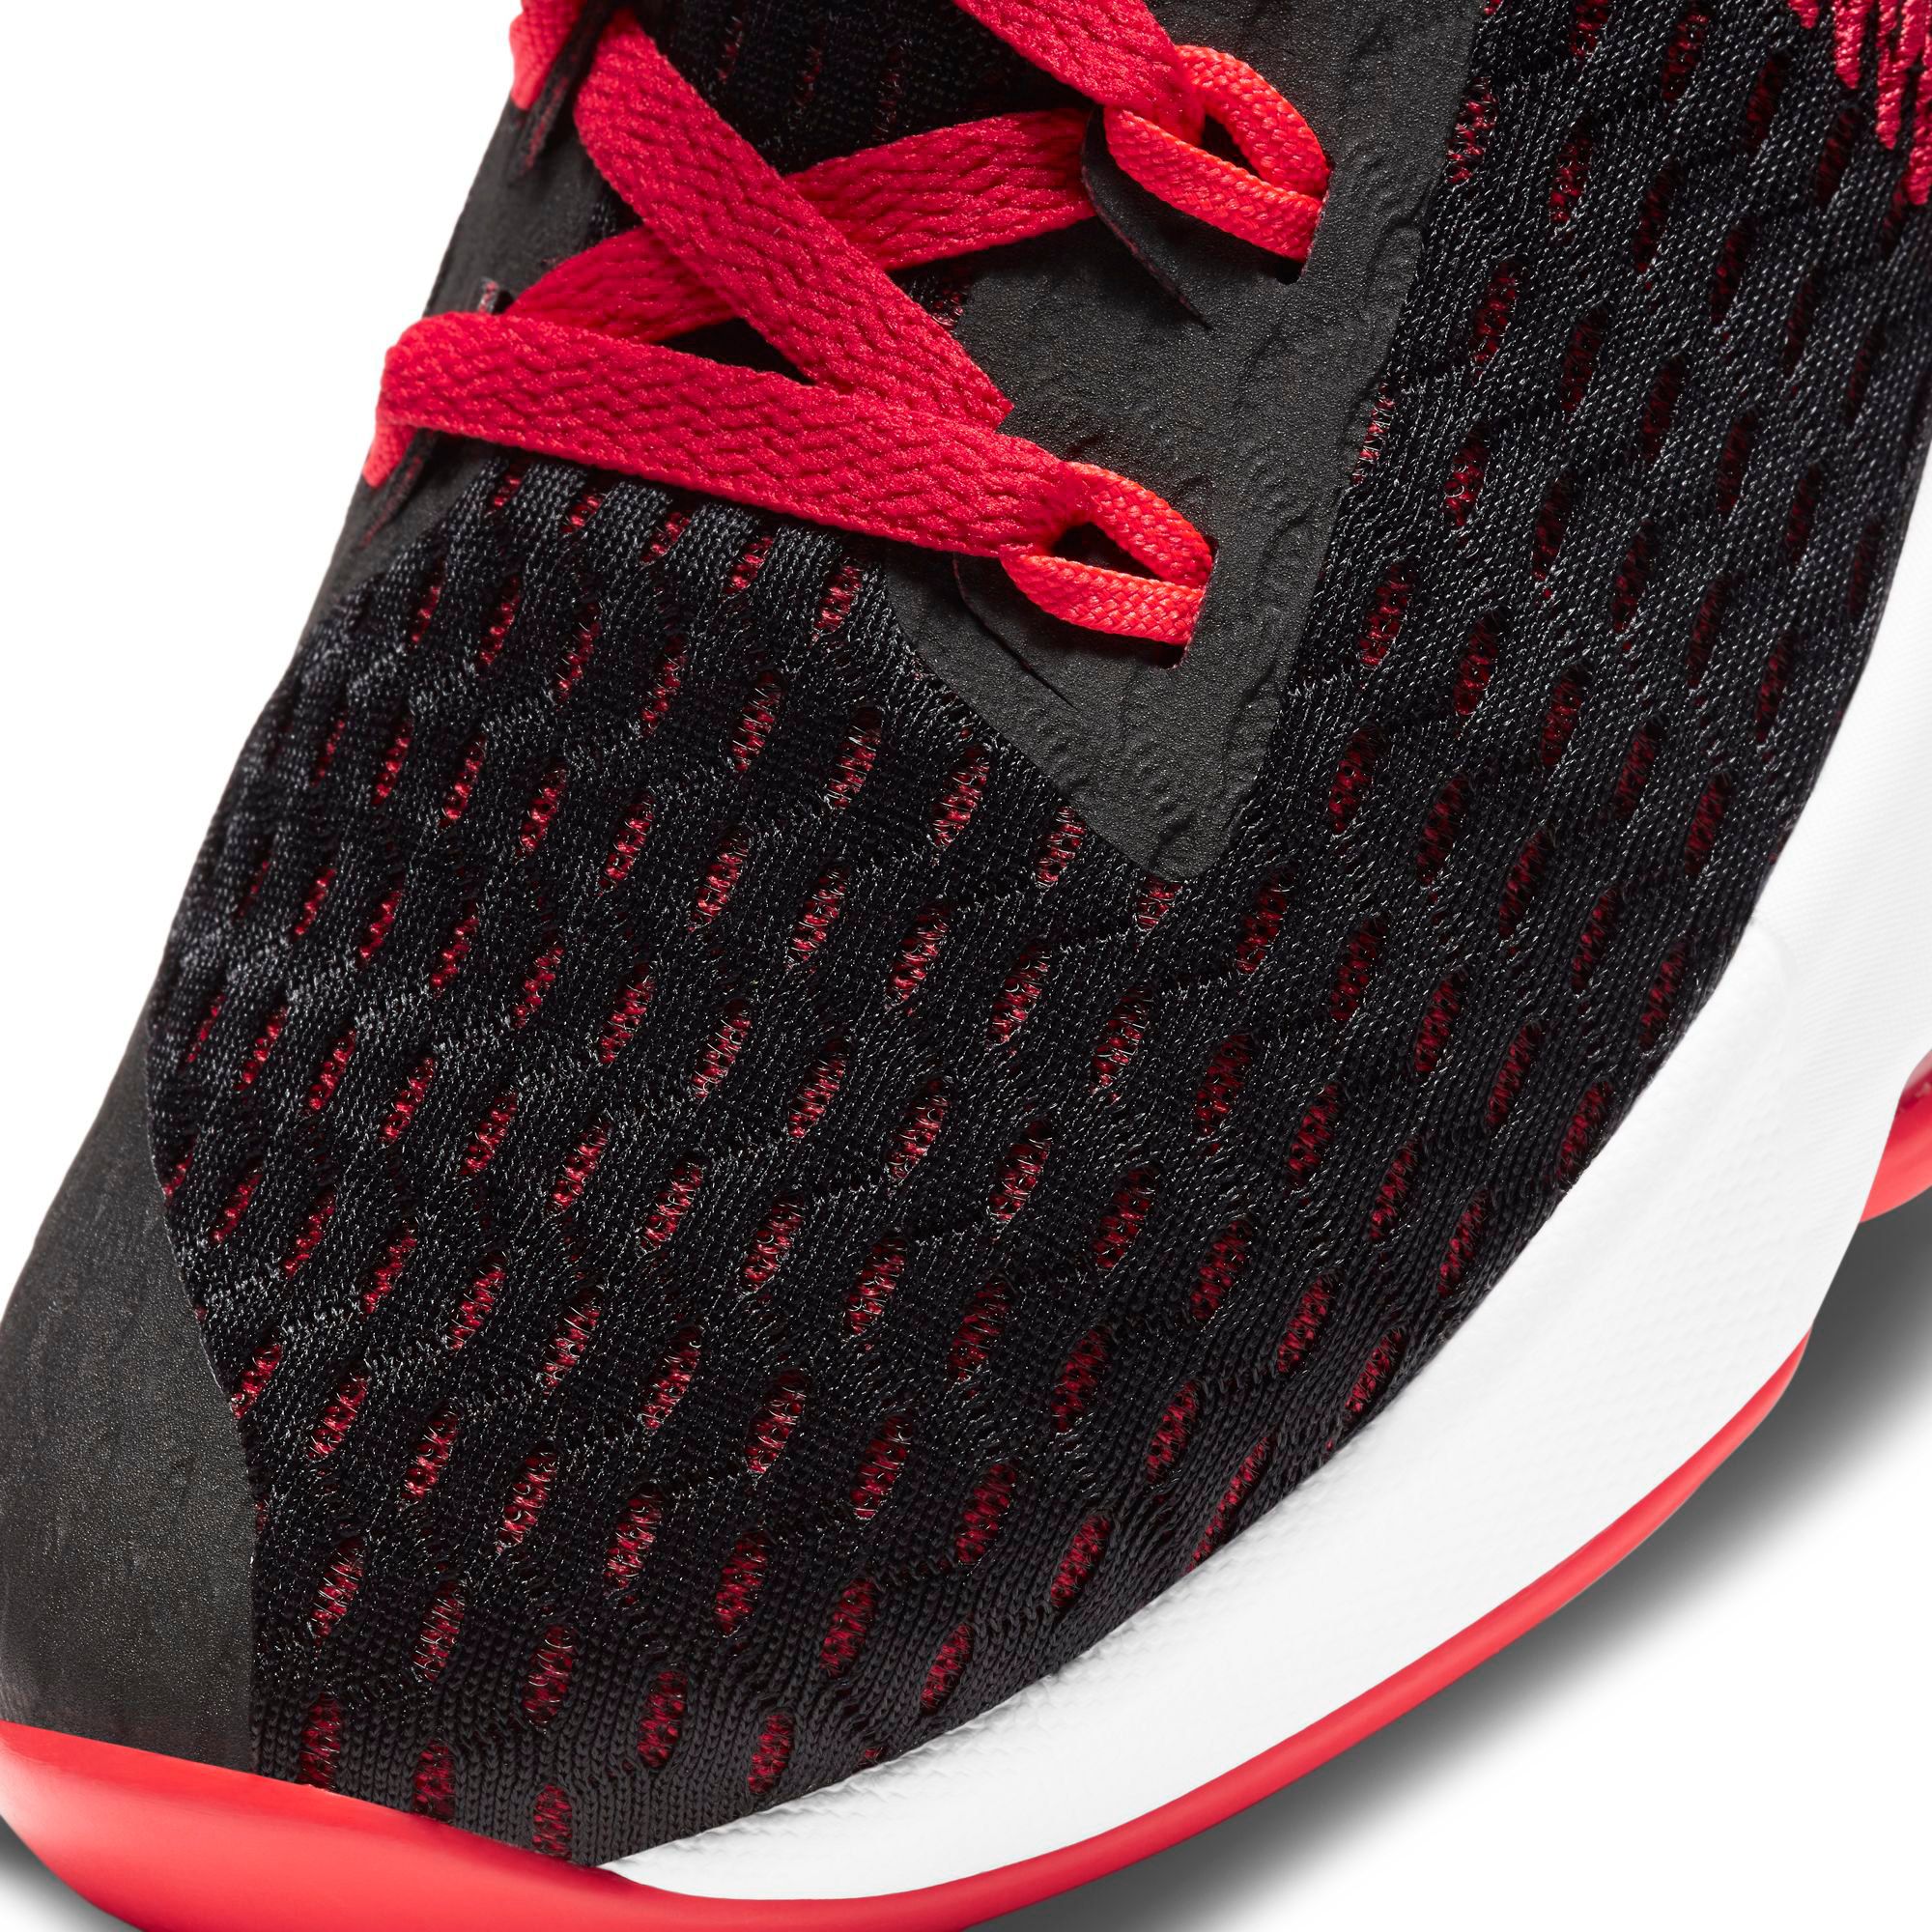 Nike LeBron Witness 5 Basketball Shoes, Black/Bright Crimson/University Red, 14